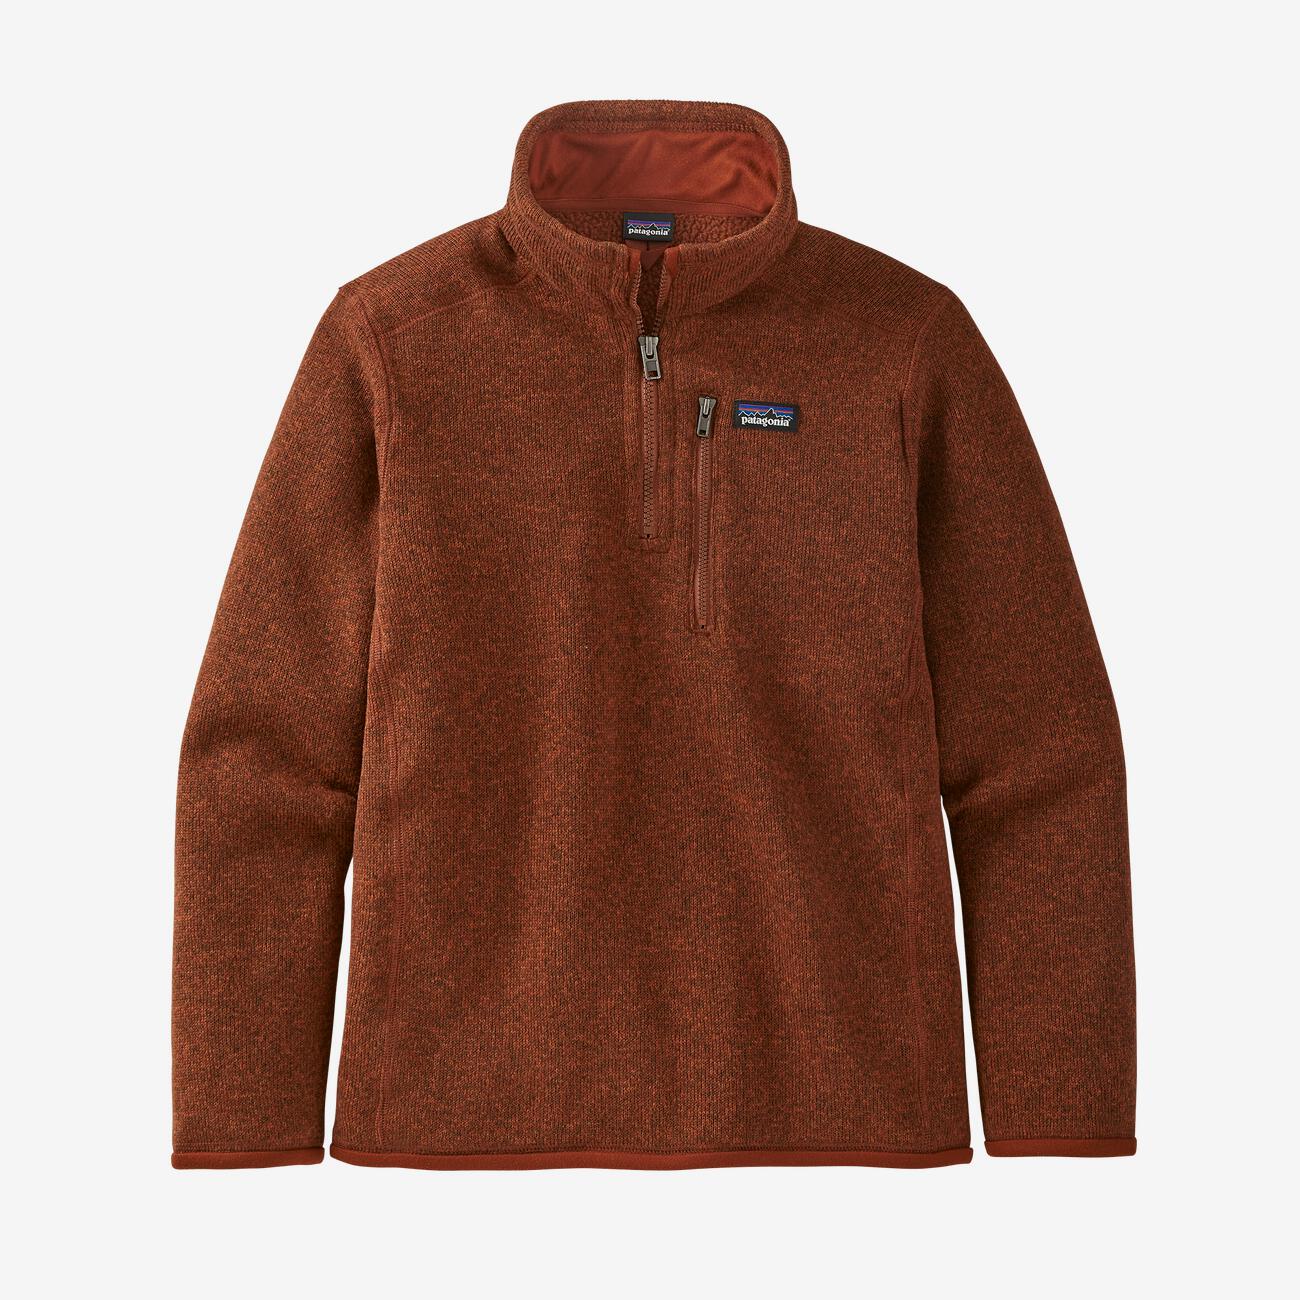 Patagonia - Boys' Better Sweater 1/4 Zip Fleece, Barn Red